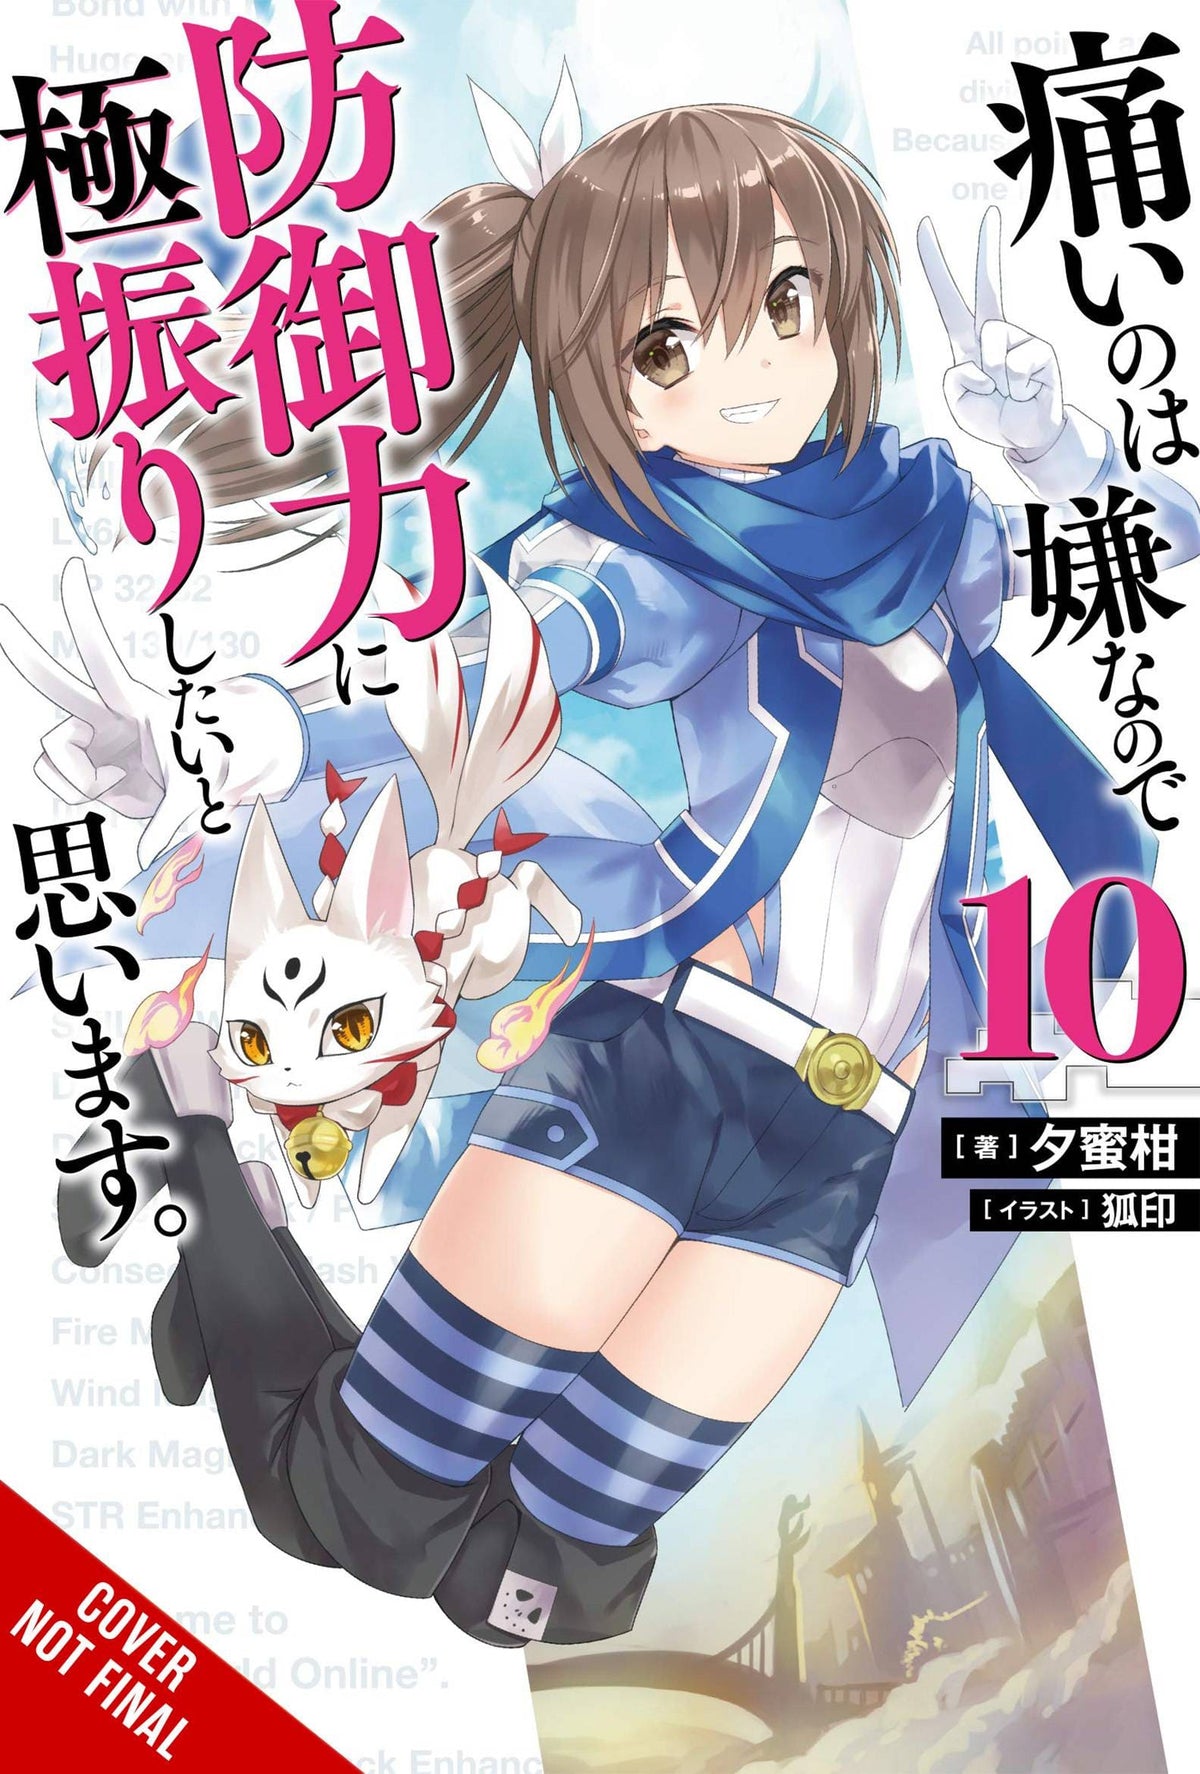 Bofuri Dont Want To Get Hurt Max Out Defense Novel SC Vol 10